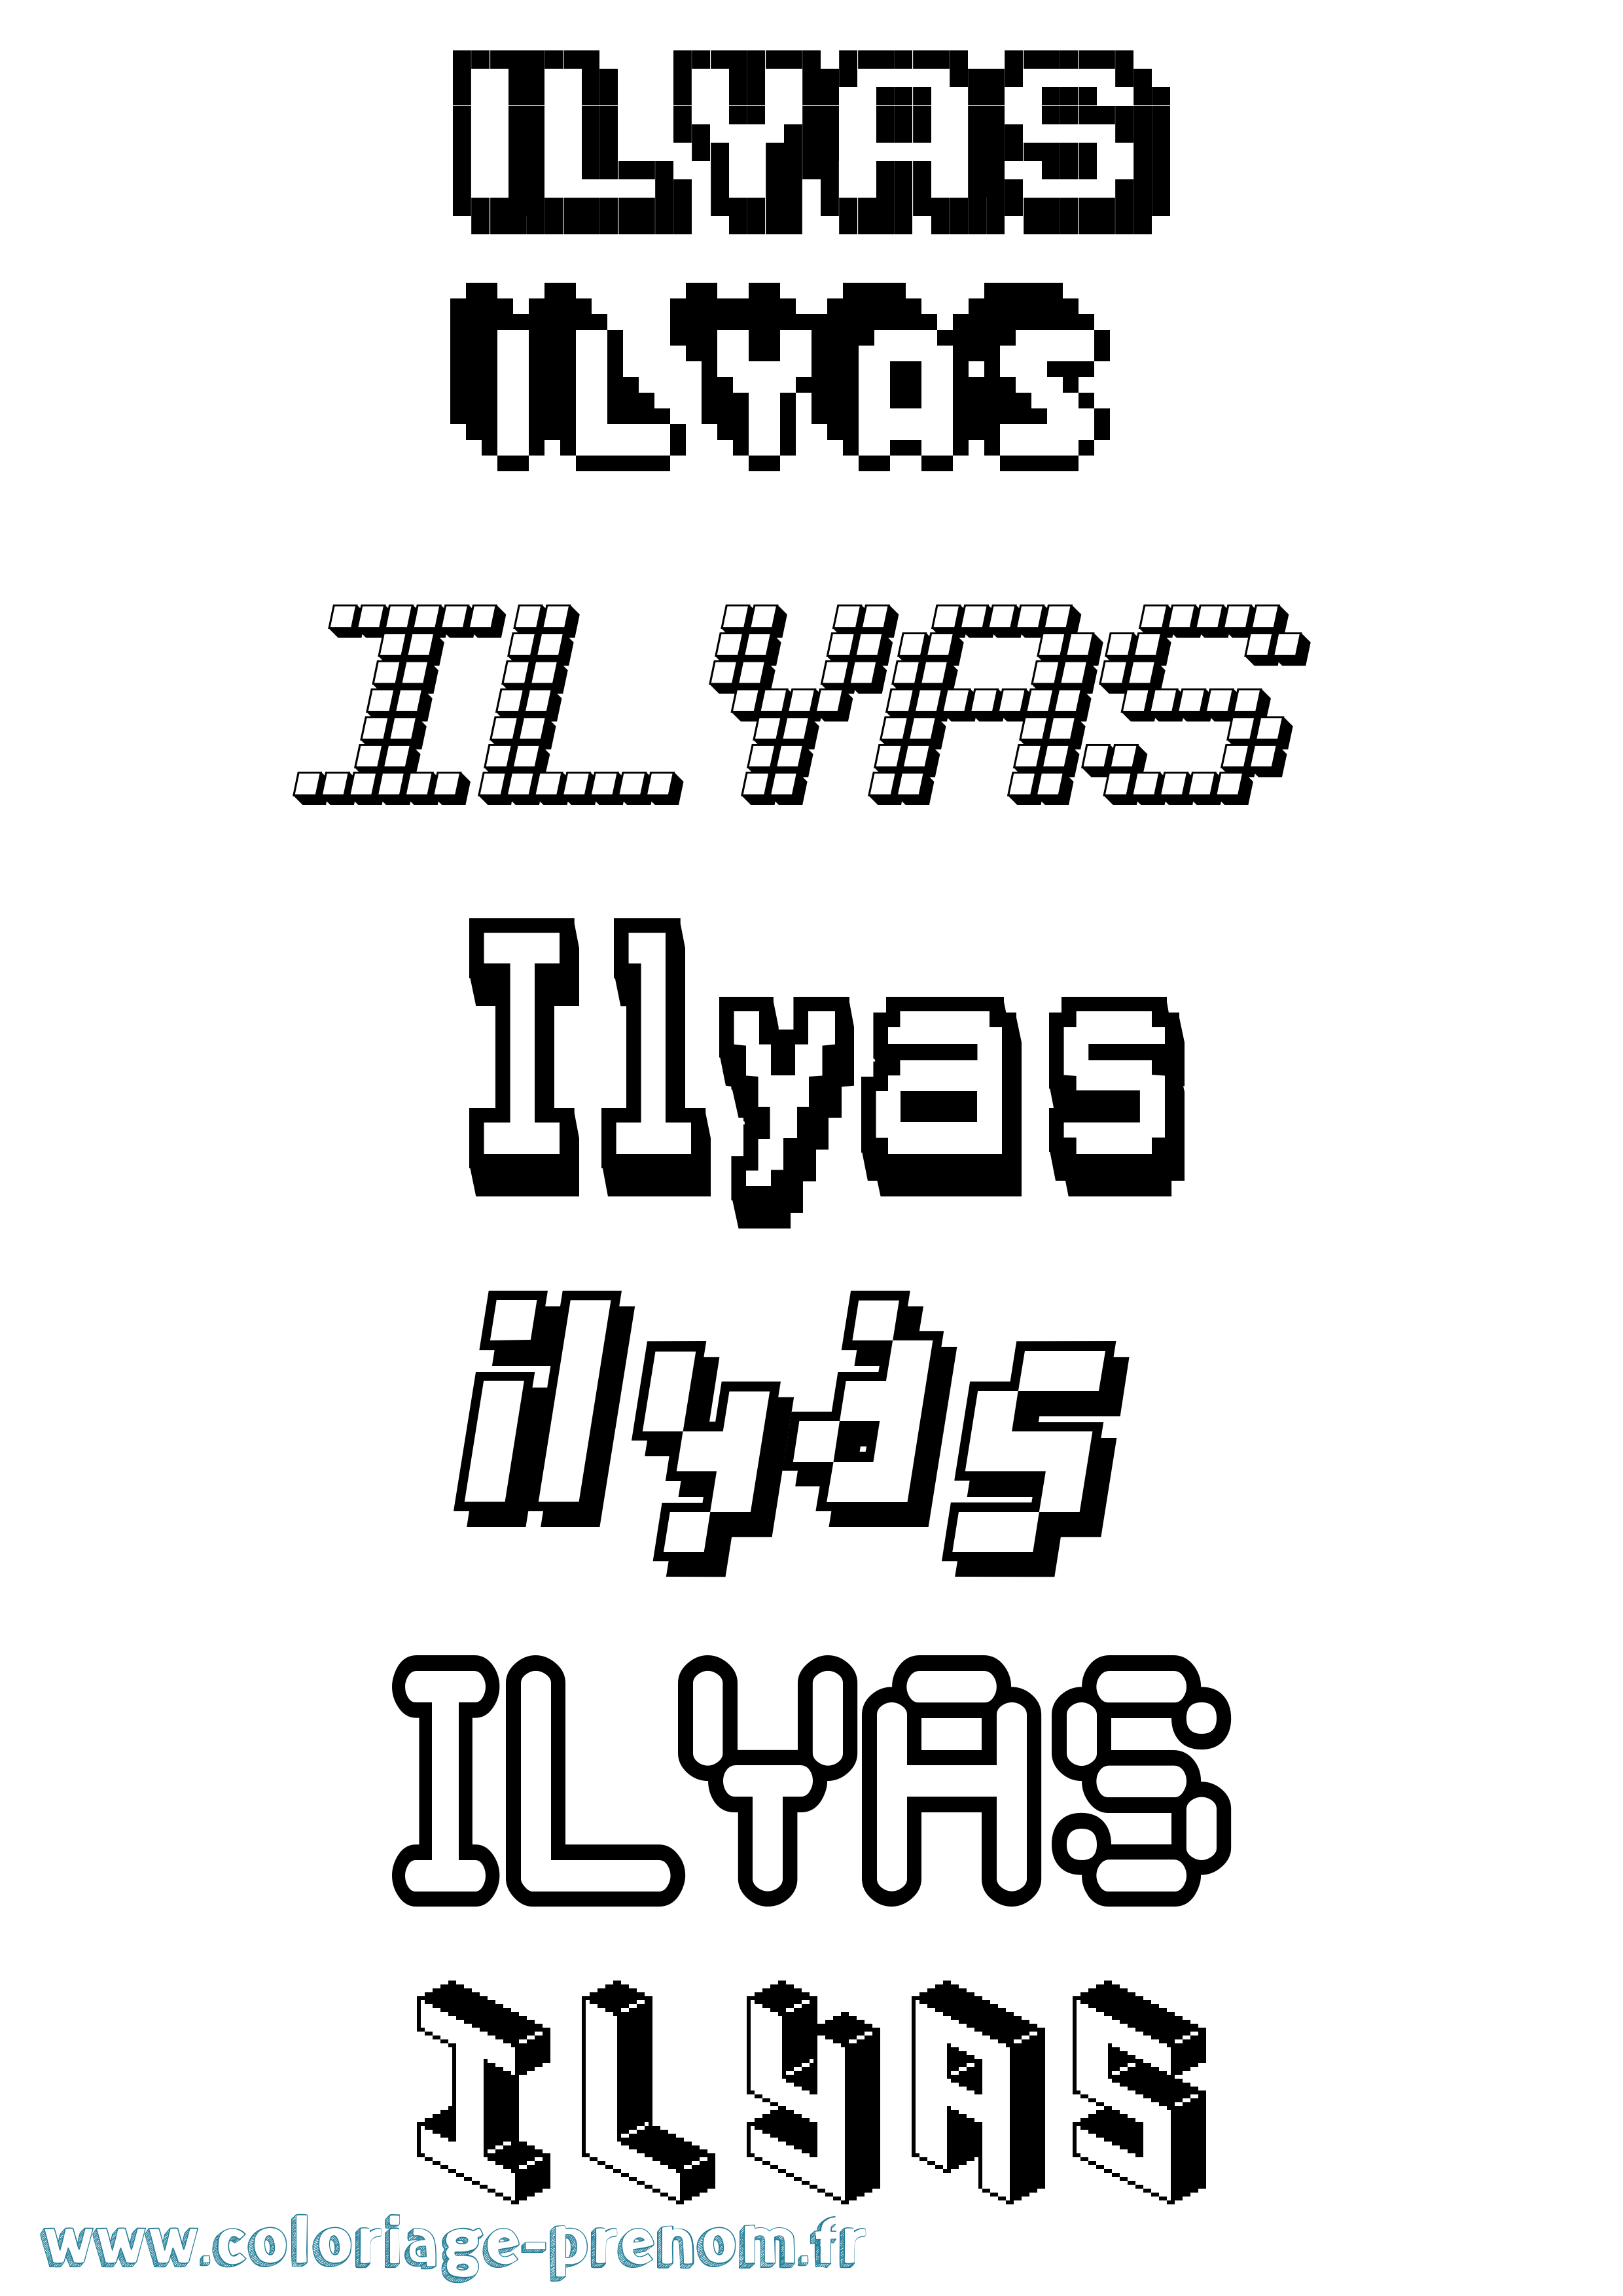 Coloriage prénom Ilyas Pixel